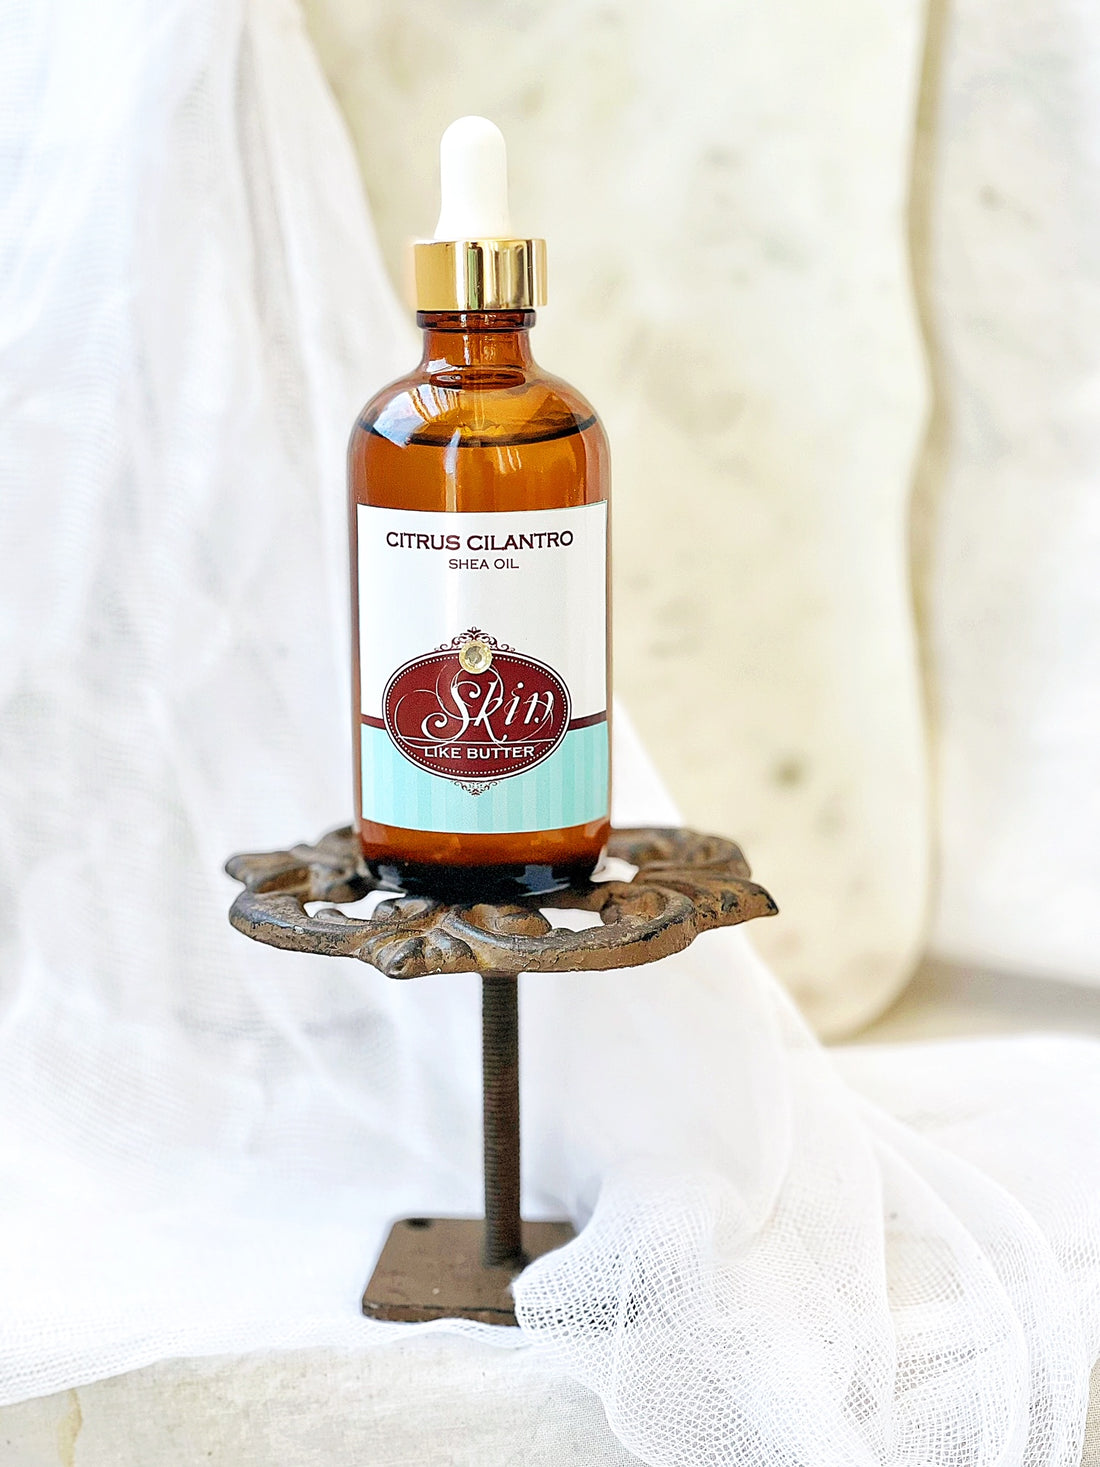 CITRUS CILANTRO - Shea Body Oil - 4 oz amber bottles, highly moisturizing